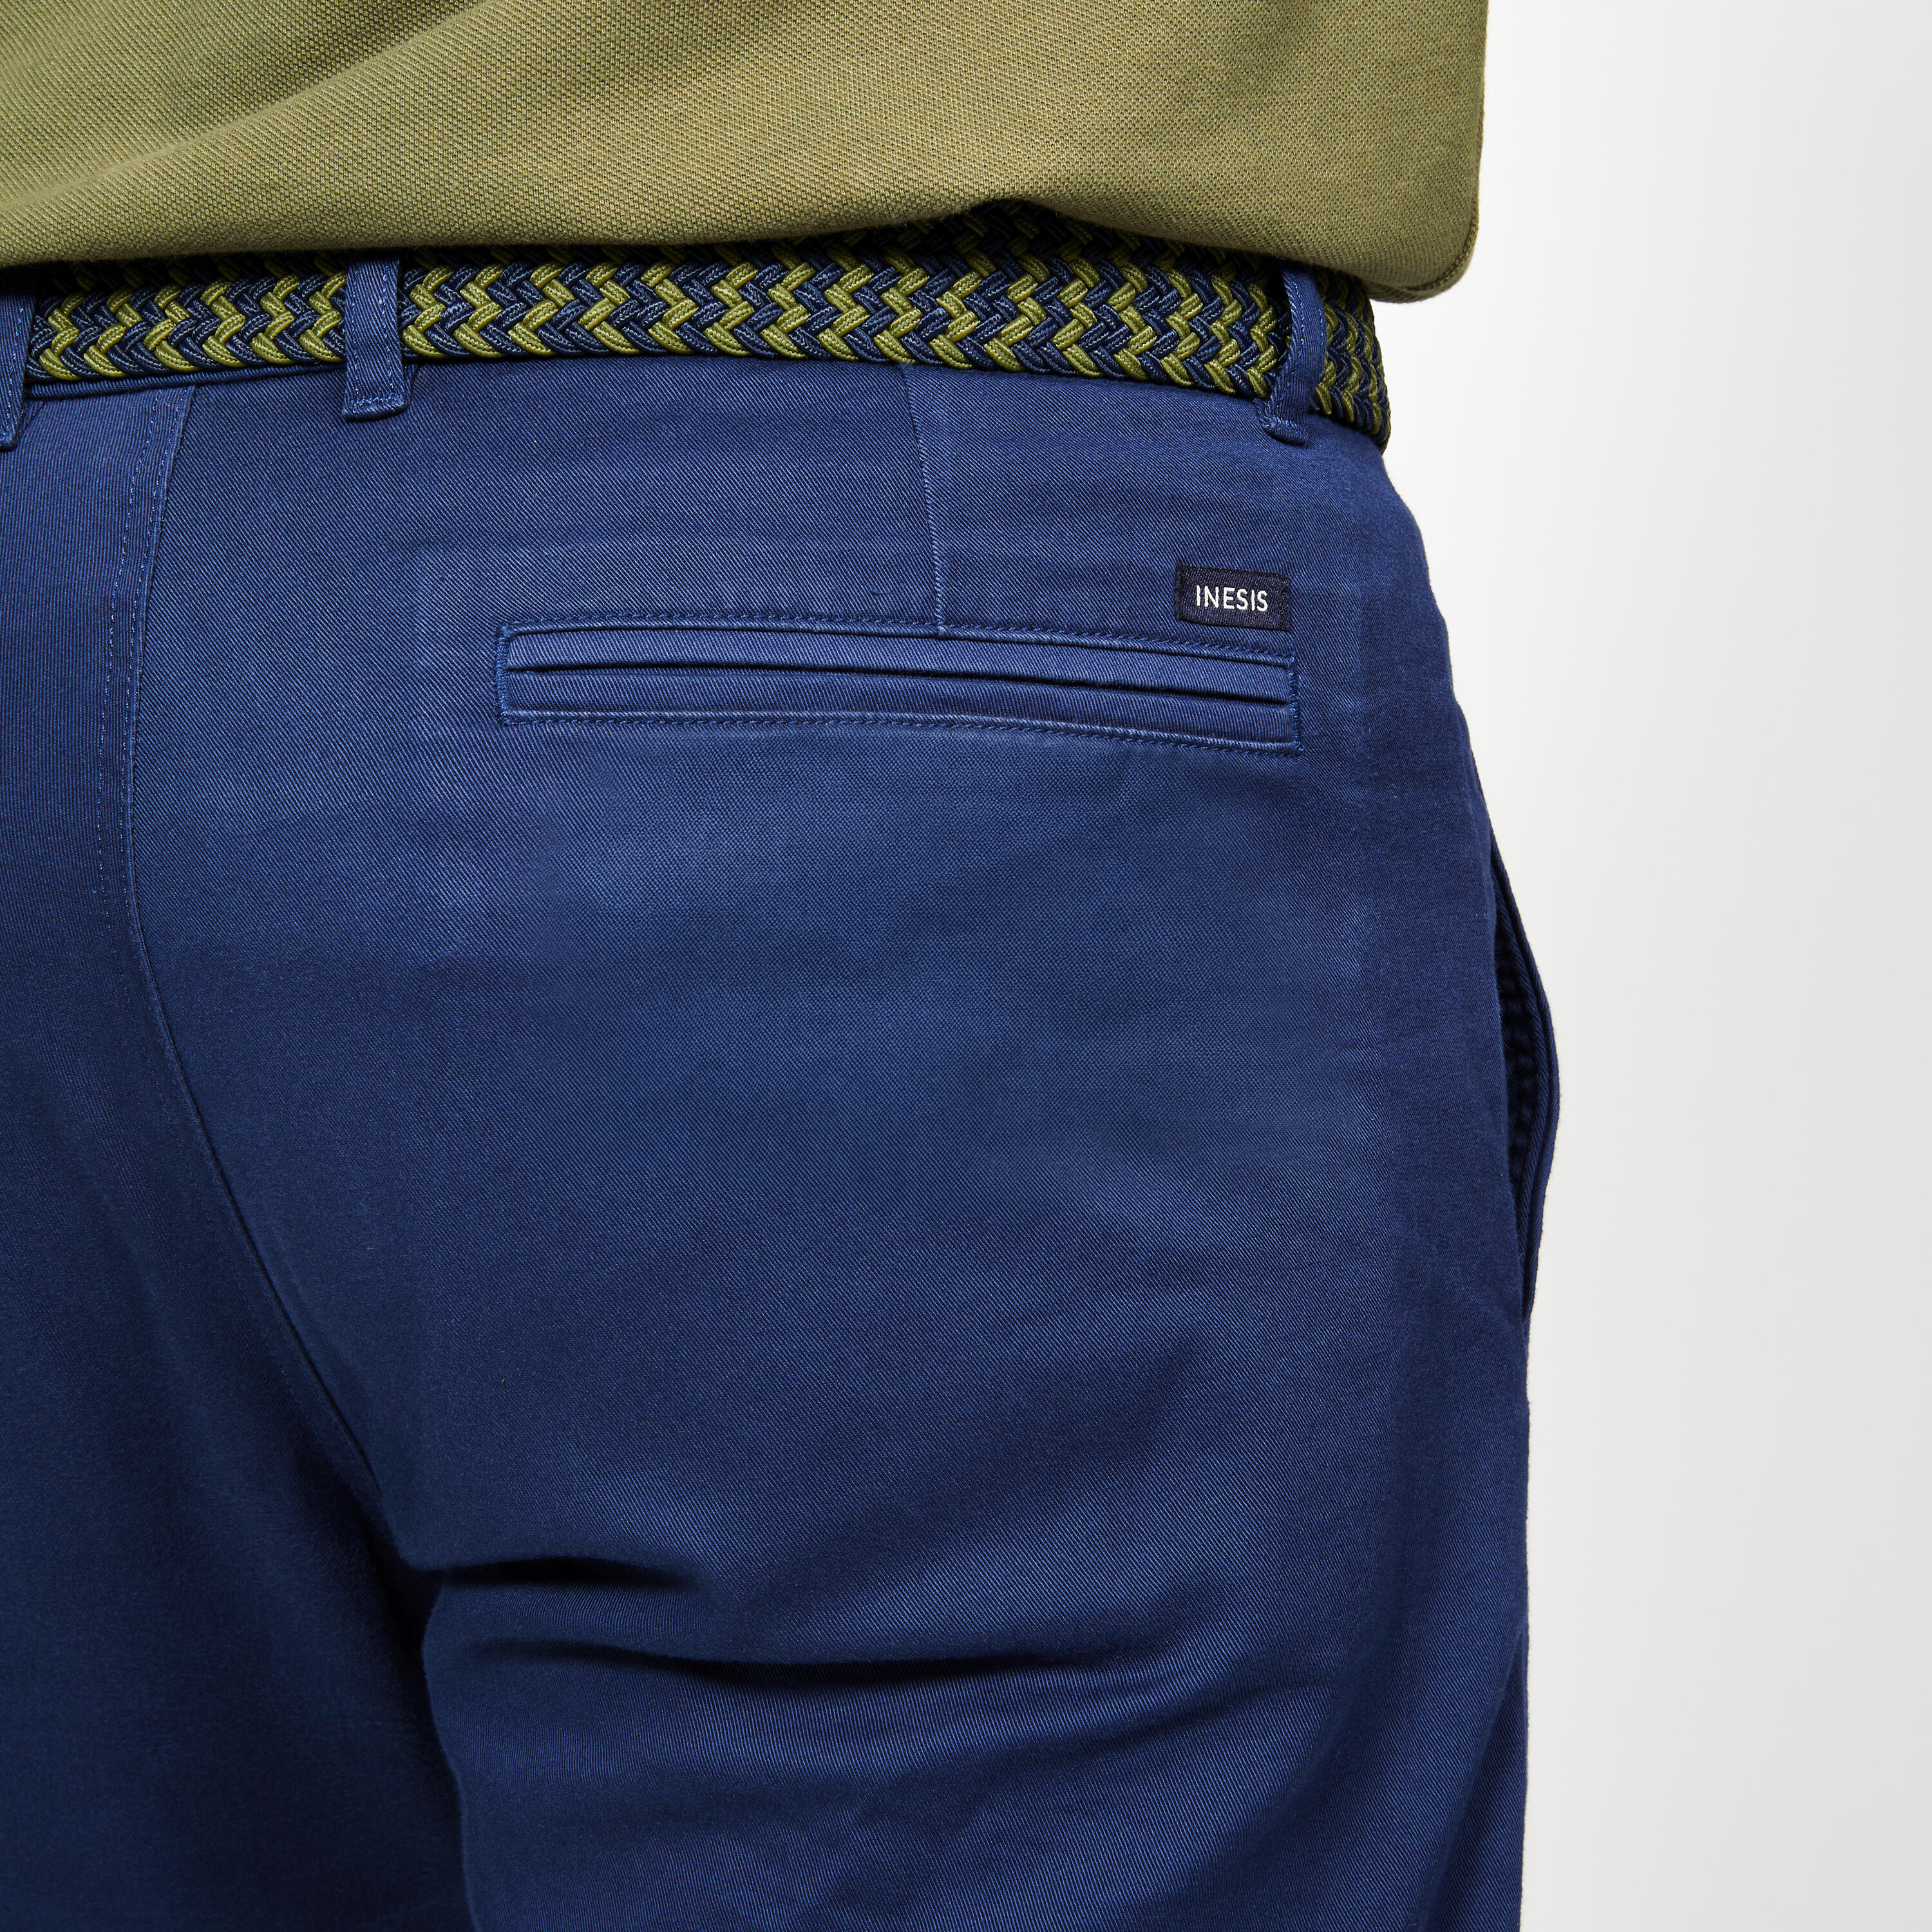 Men's golf cotton chino trousers - MW500 blue 4/4